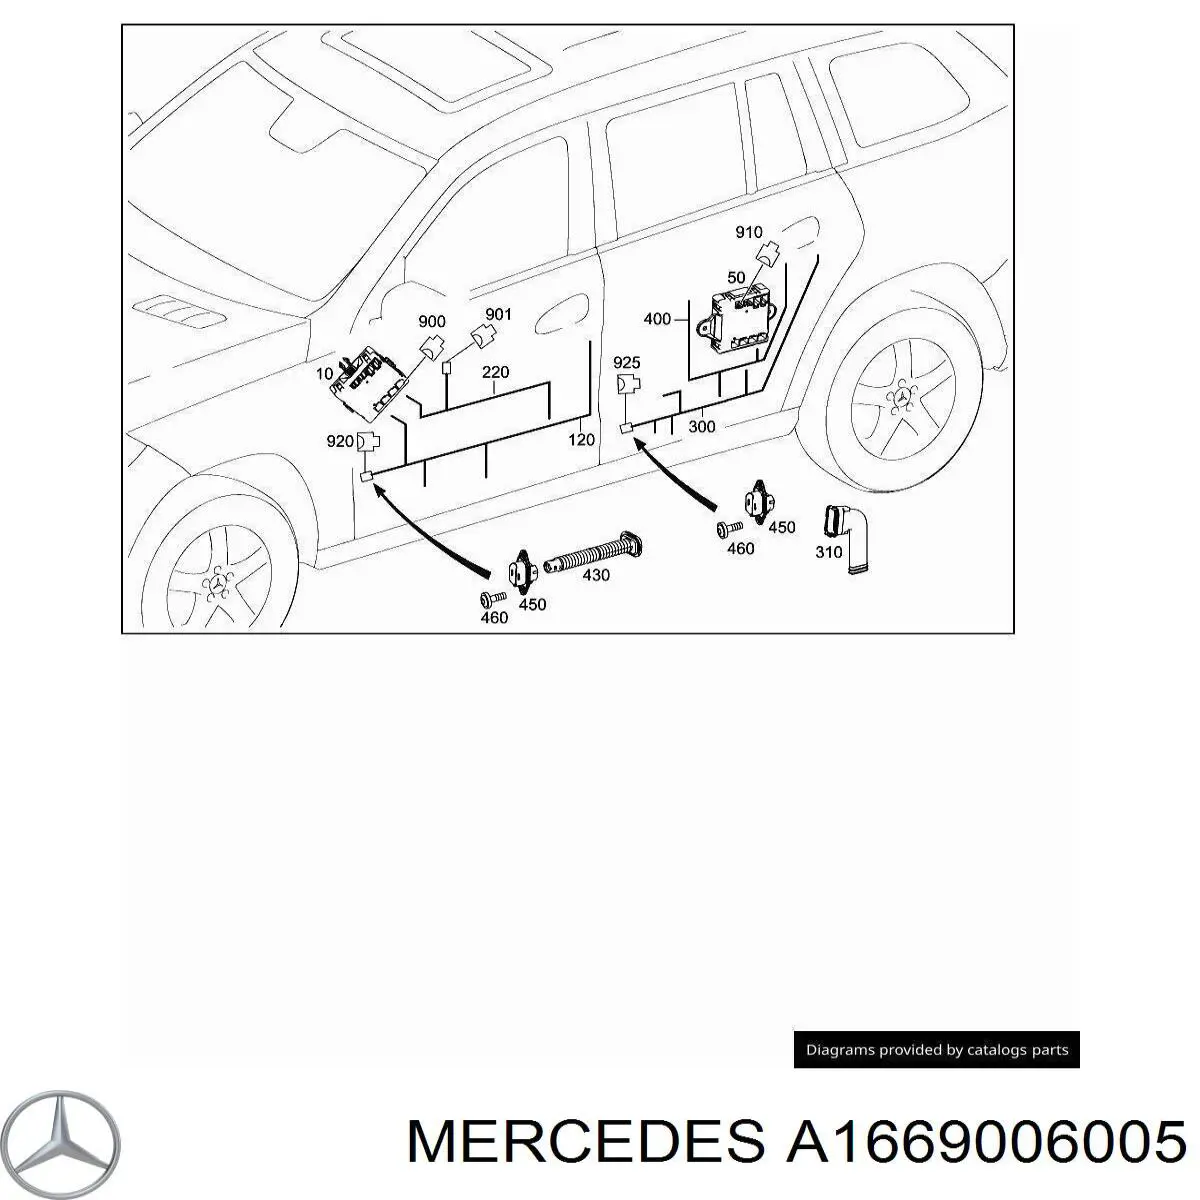 A1669006005 Mercedes 